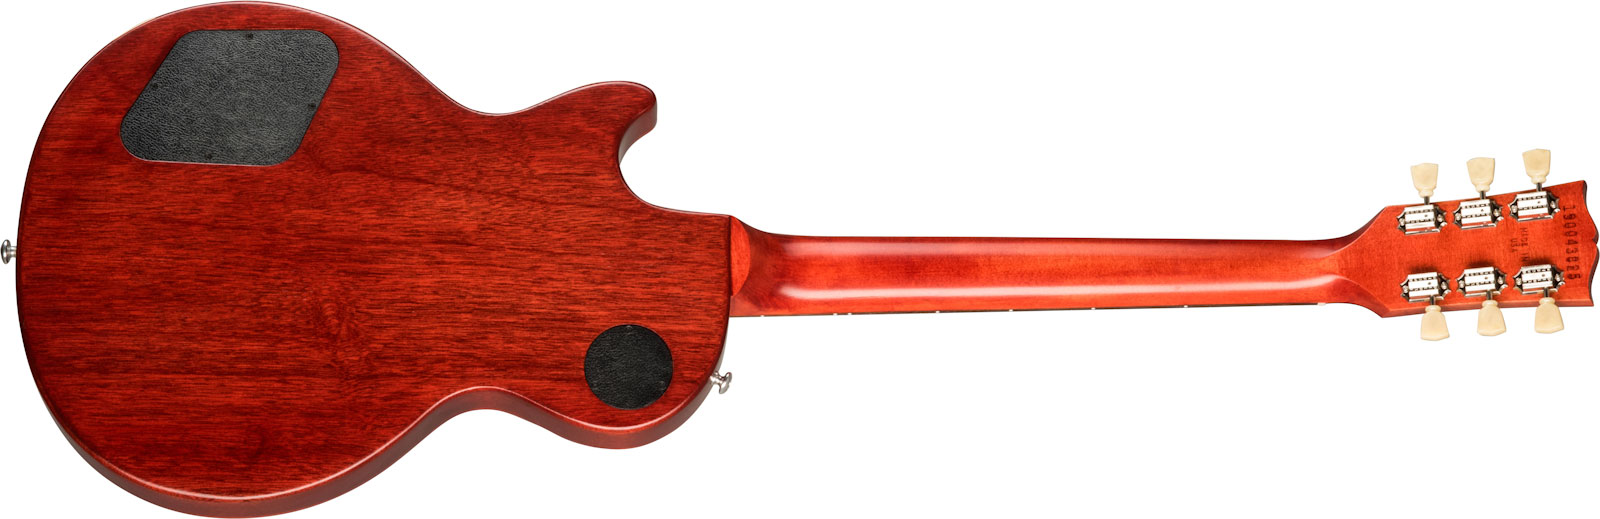 Gibson Les Paul Tribute Modern 2h Ht Rw - Satin Iced Tea - Guitarra eléctrica de corte único. - Variation 1